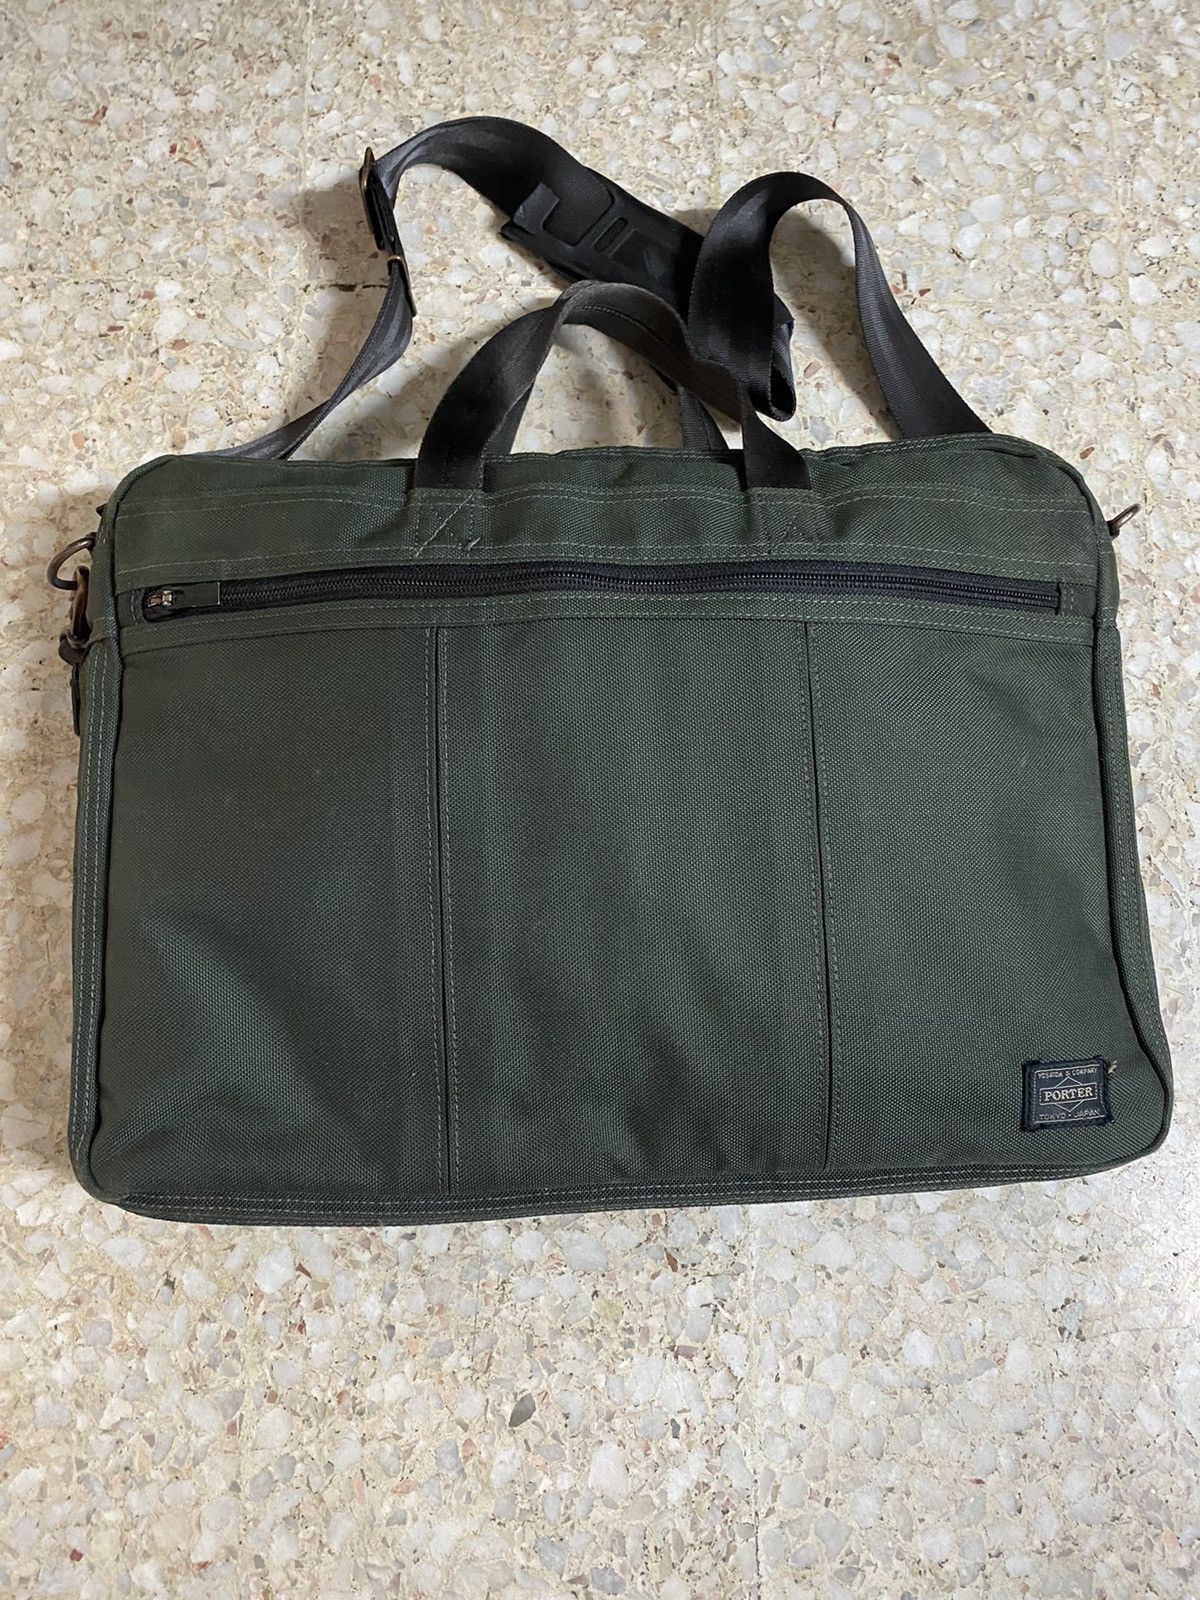 Porter Cordura Messenger Bag Green Army Made in Japan - 3